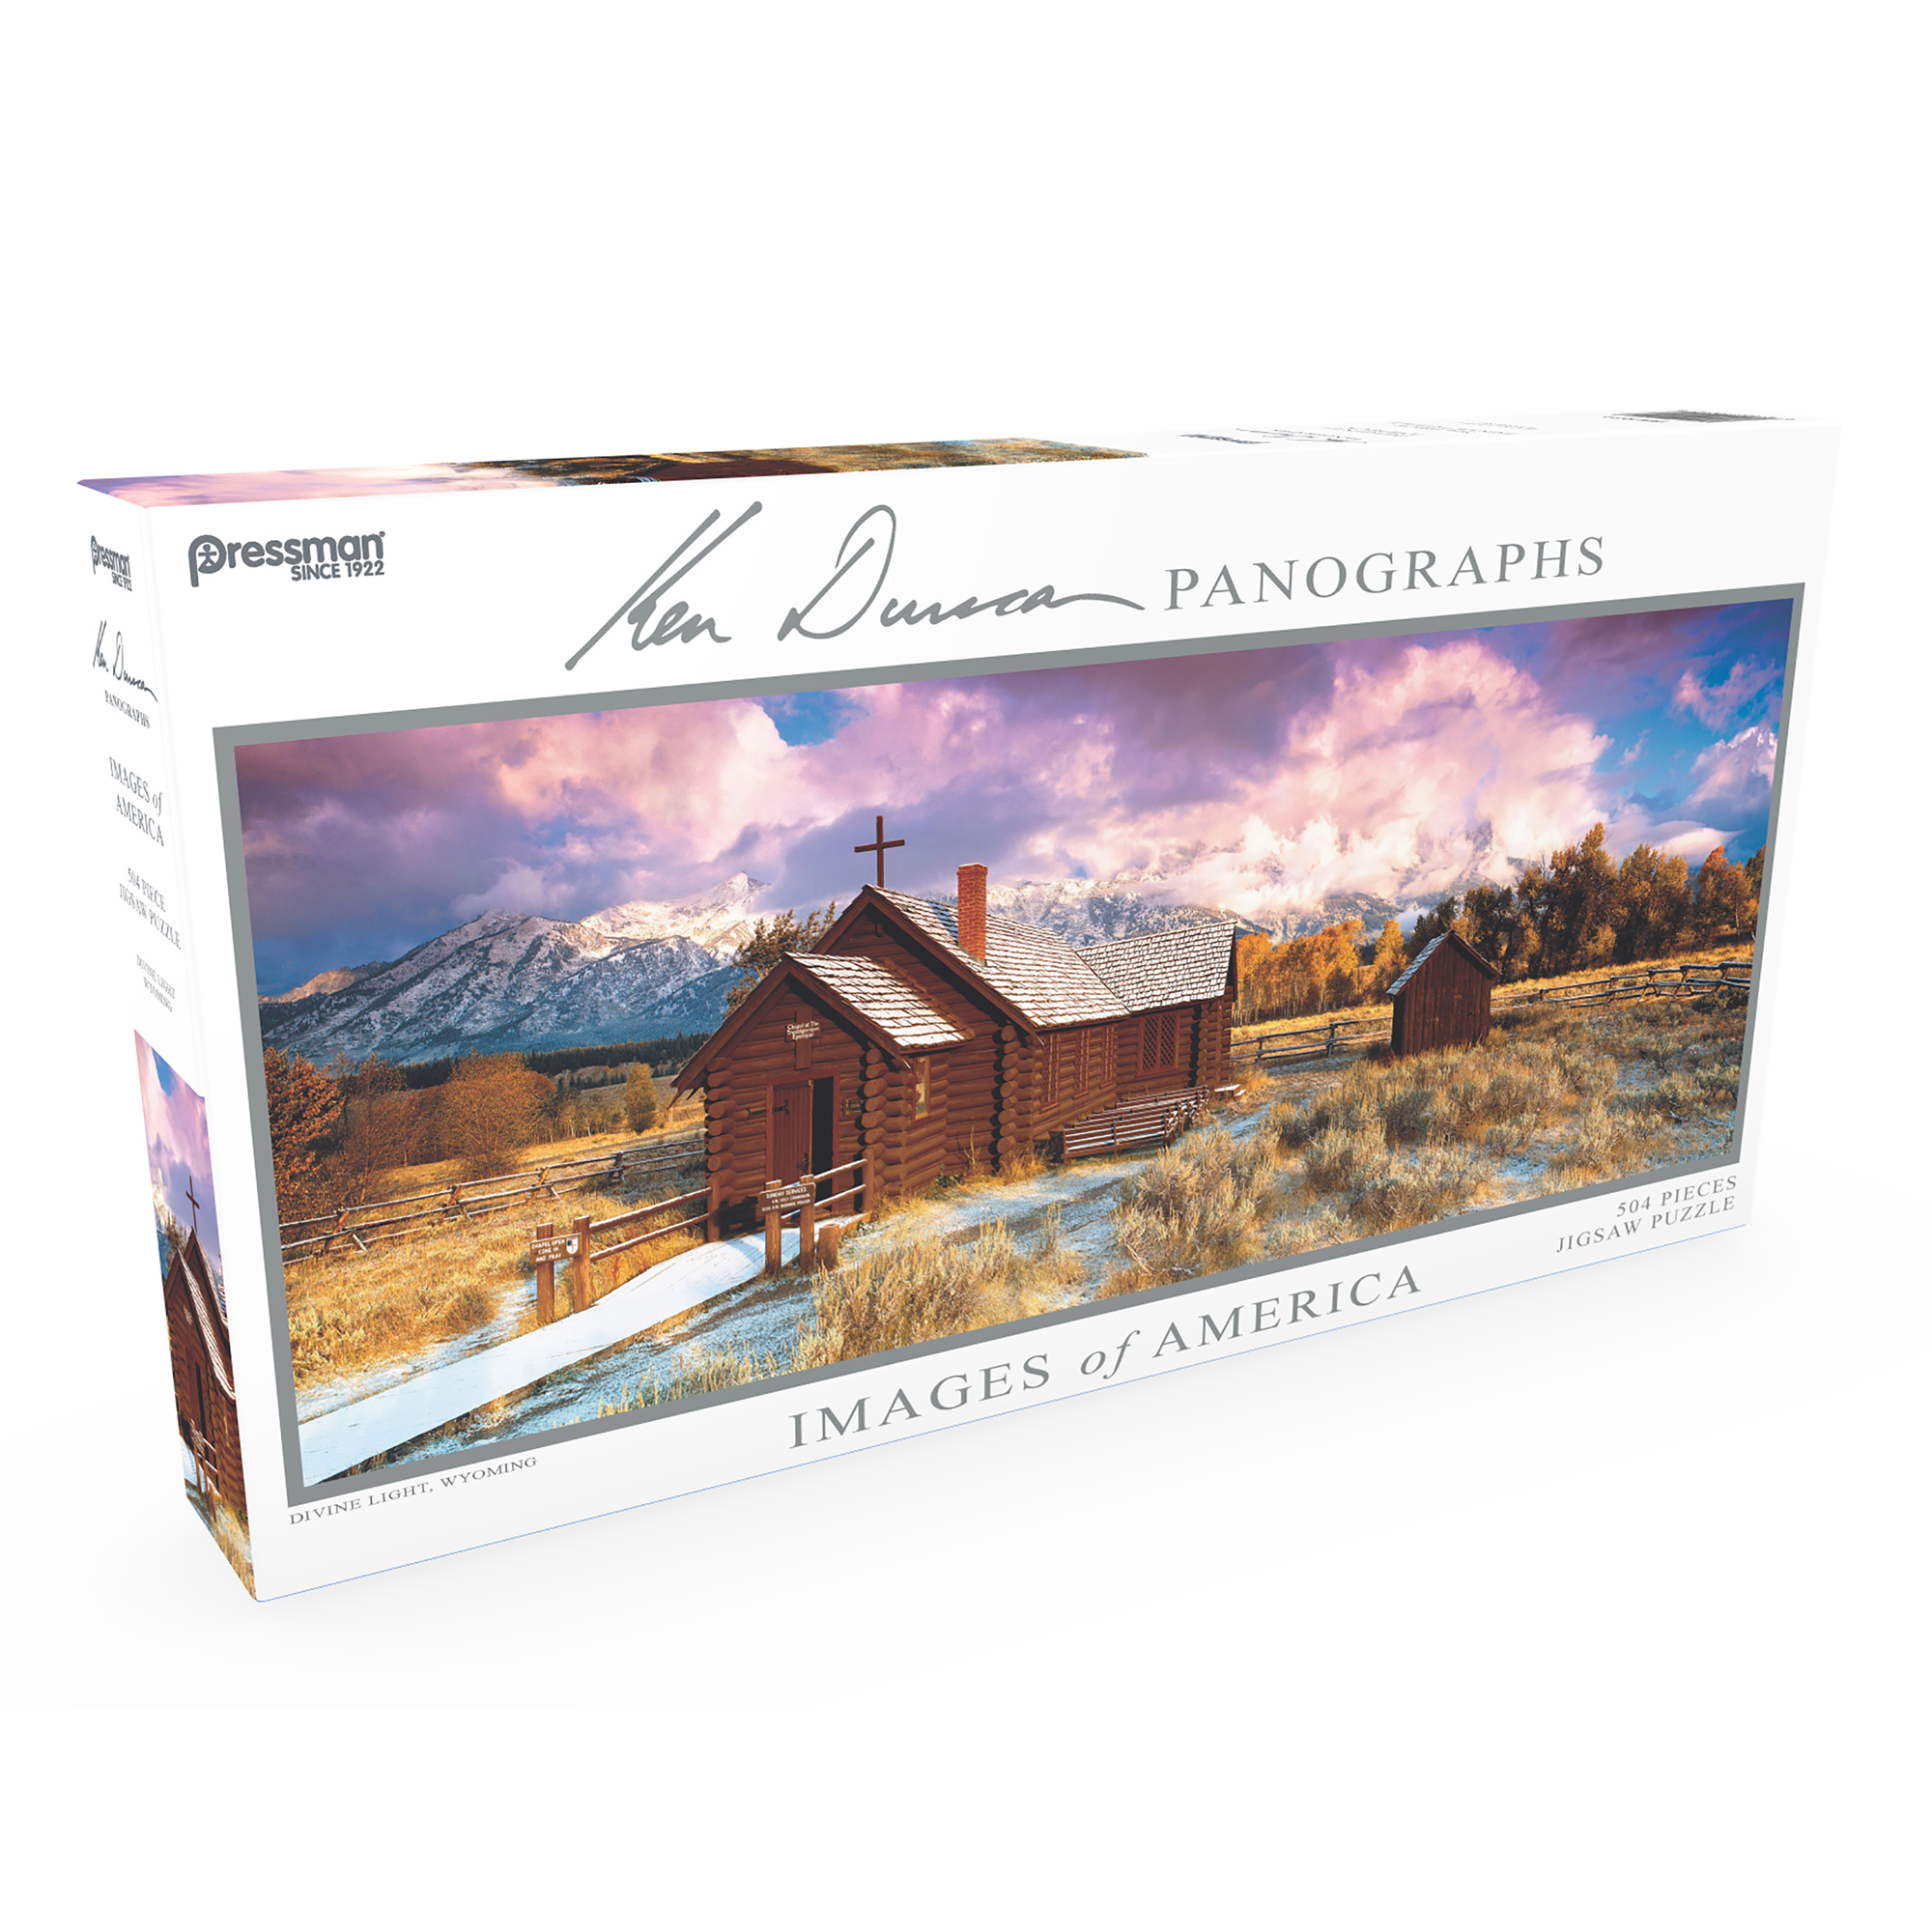 Pressman Toy Images of America 504 Piece Panoramic Puzzle, Divine Light